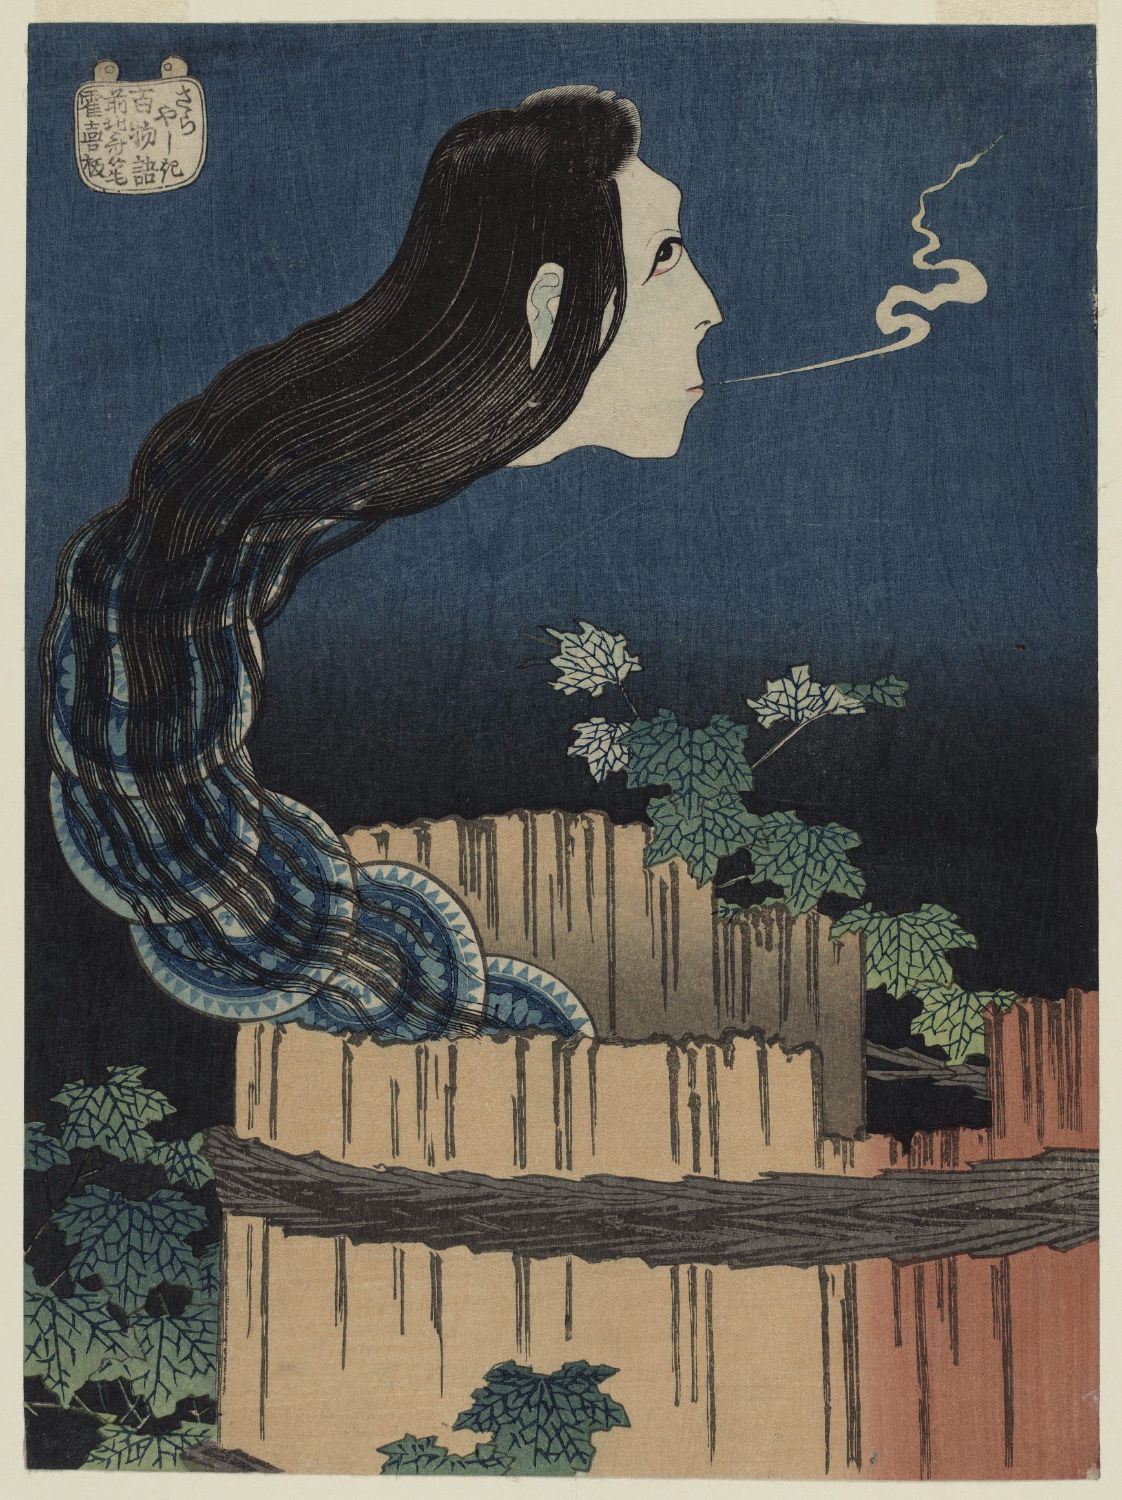 The Mansion of the Plates by Katsushika Hokusai - 1831/32 - 23.7 x 17.6 cm 